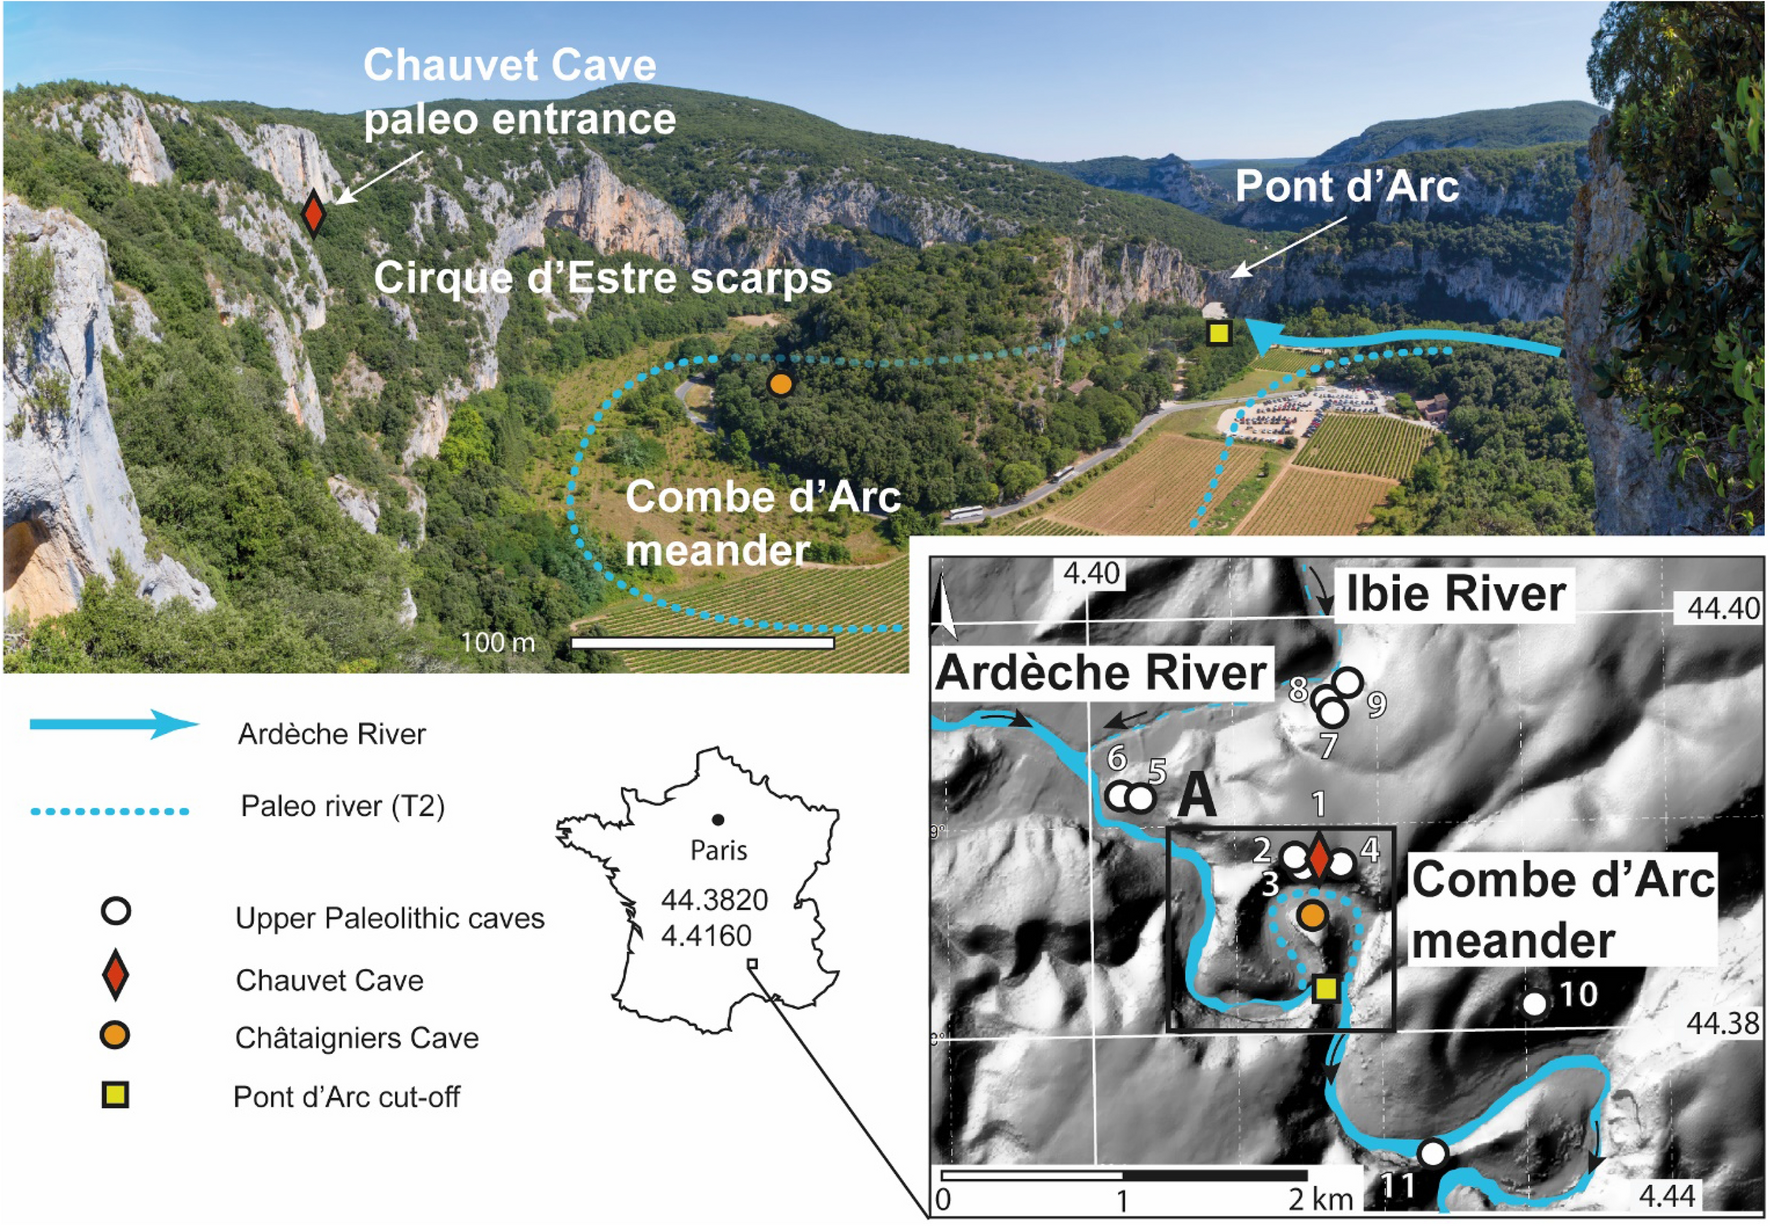 Dating the landscape evolution around the Chauvet-Pont d'Arc cave |  Scientific Reports